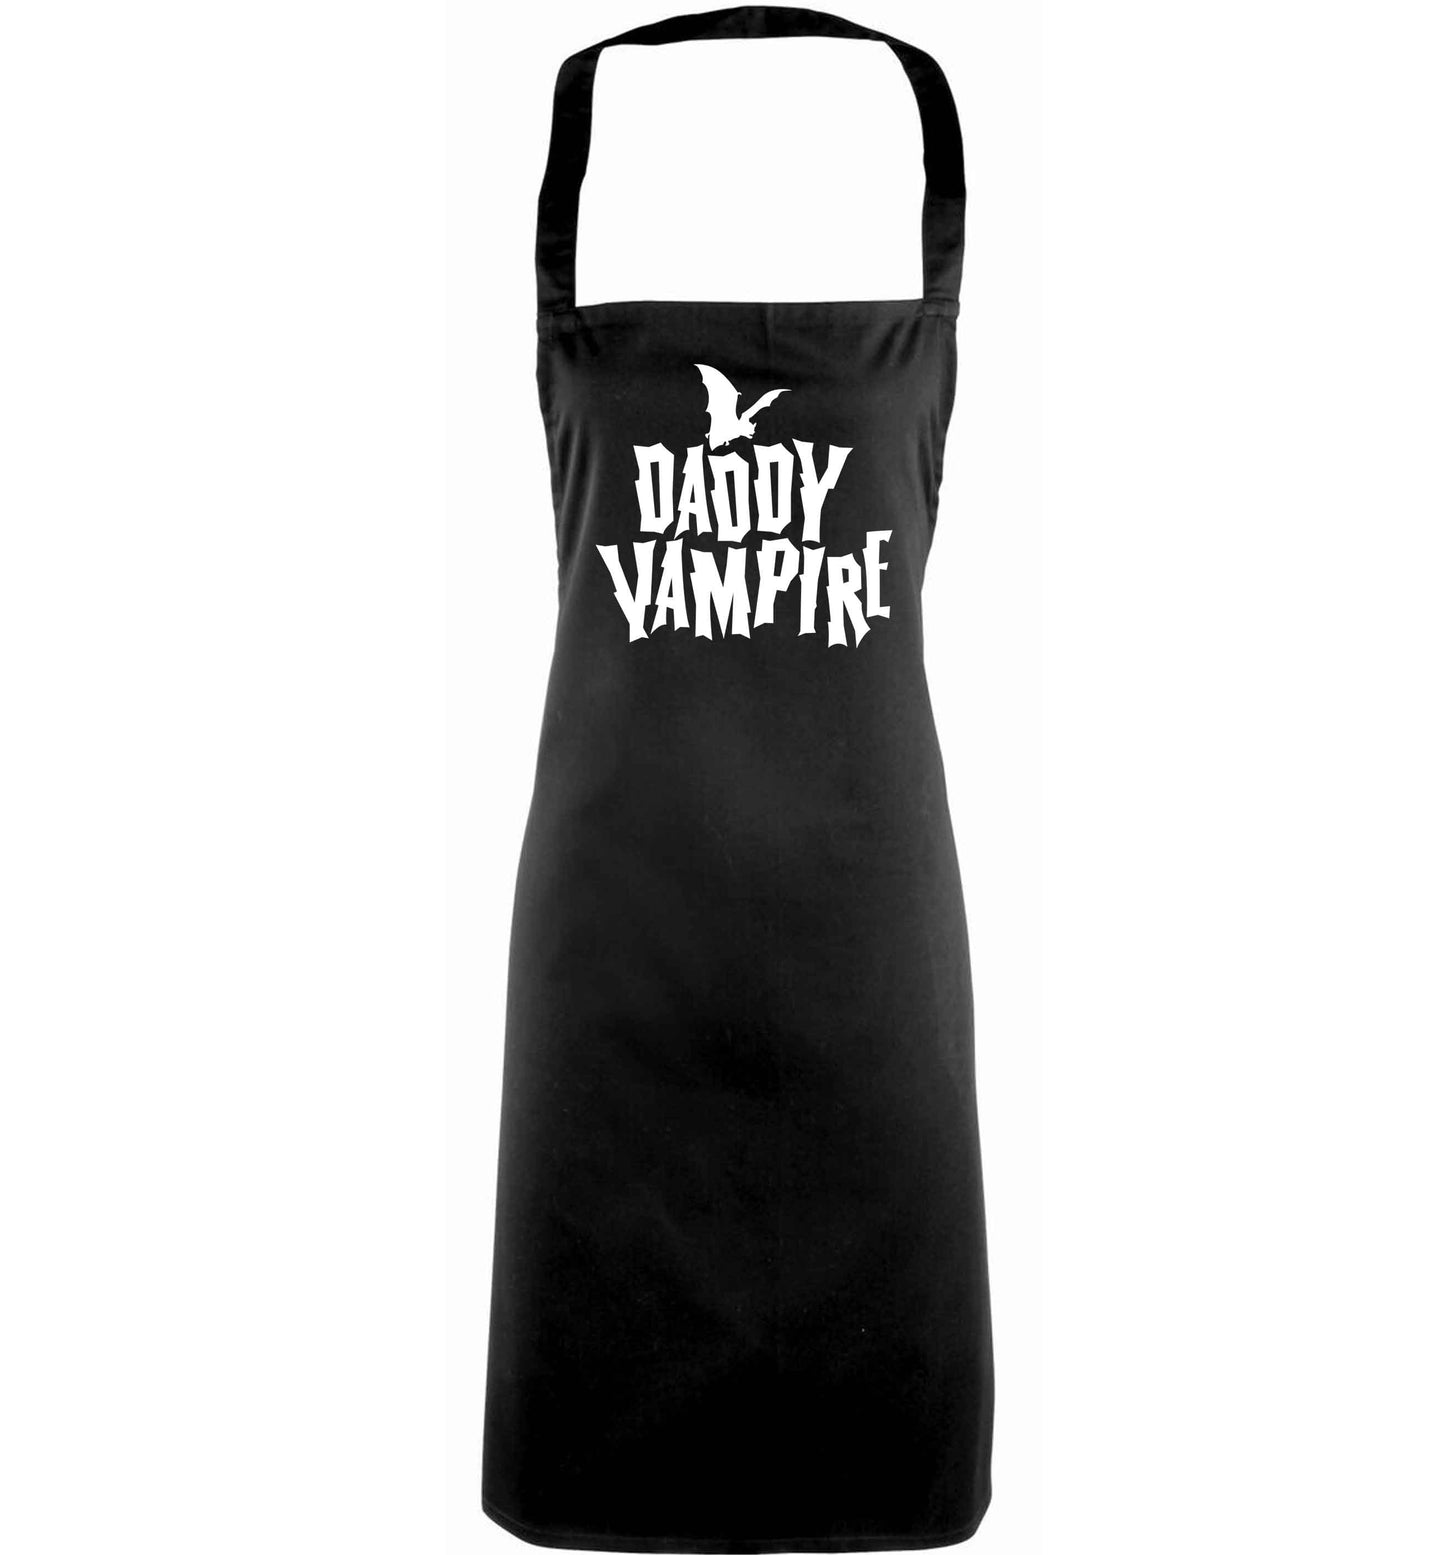 Daddy vampire adults black apron